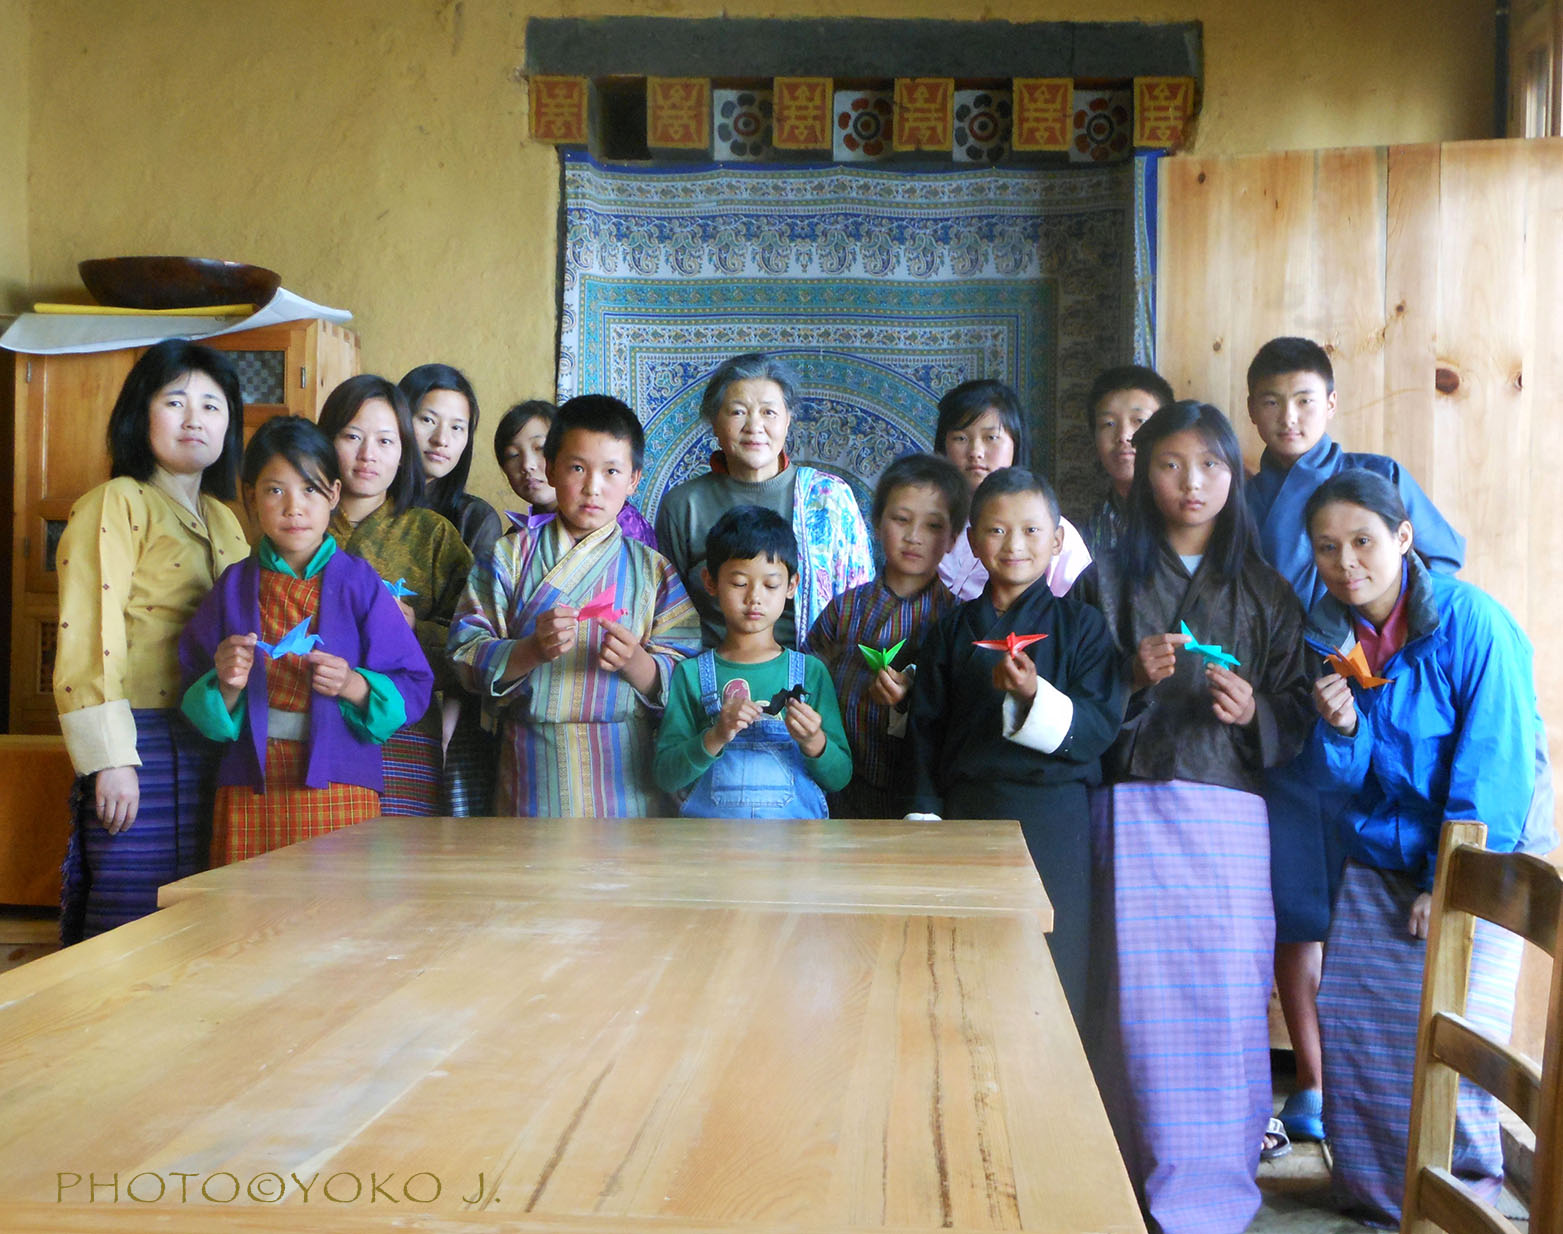 2016 July, YOKO J.  held Art workshop at Ogyen Choling, Tang, Bumthang, Bhutan.